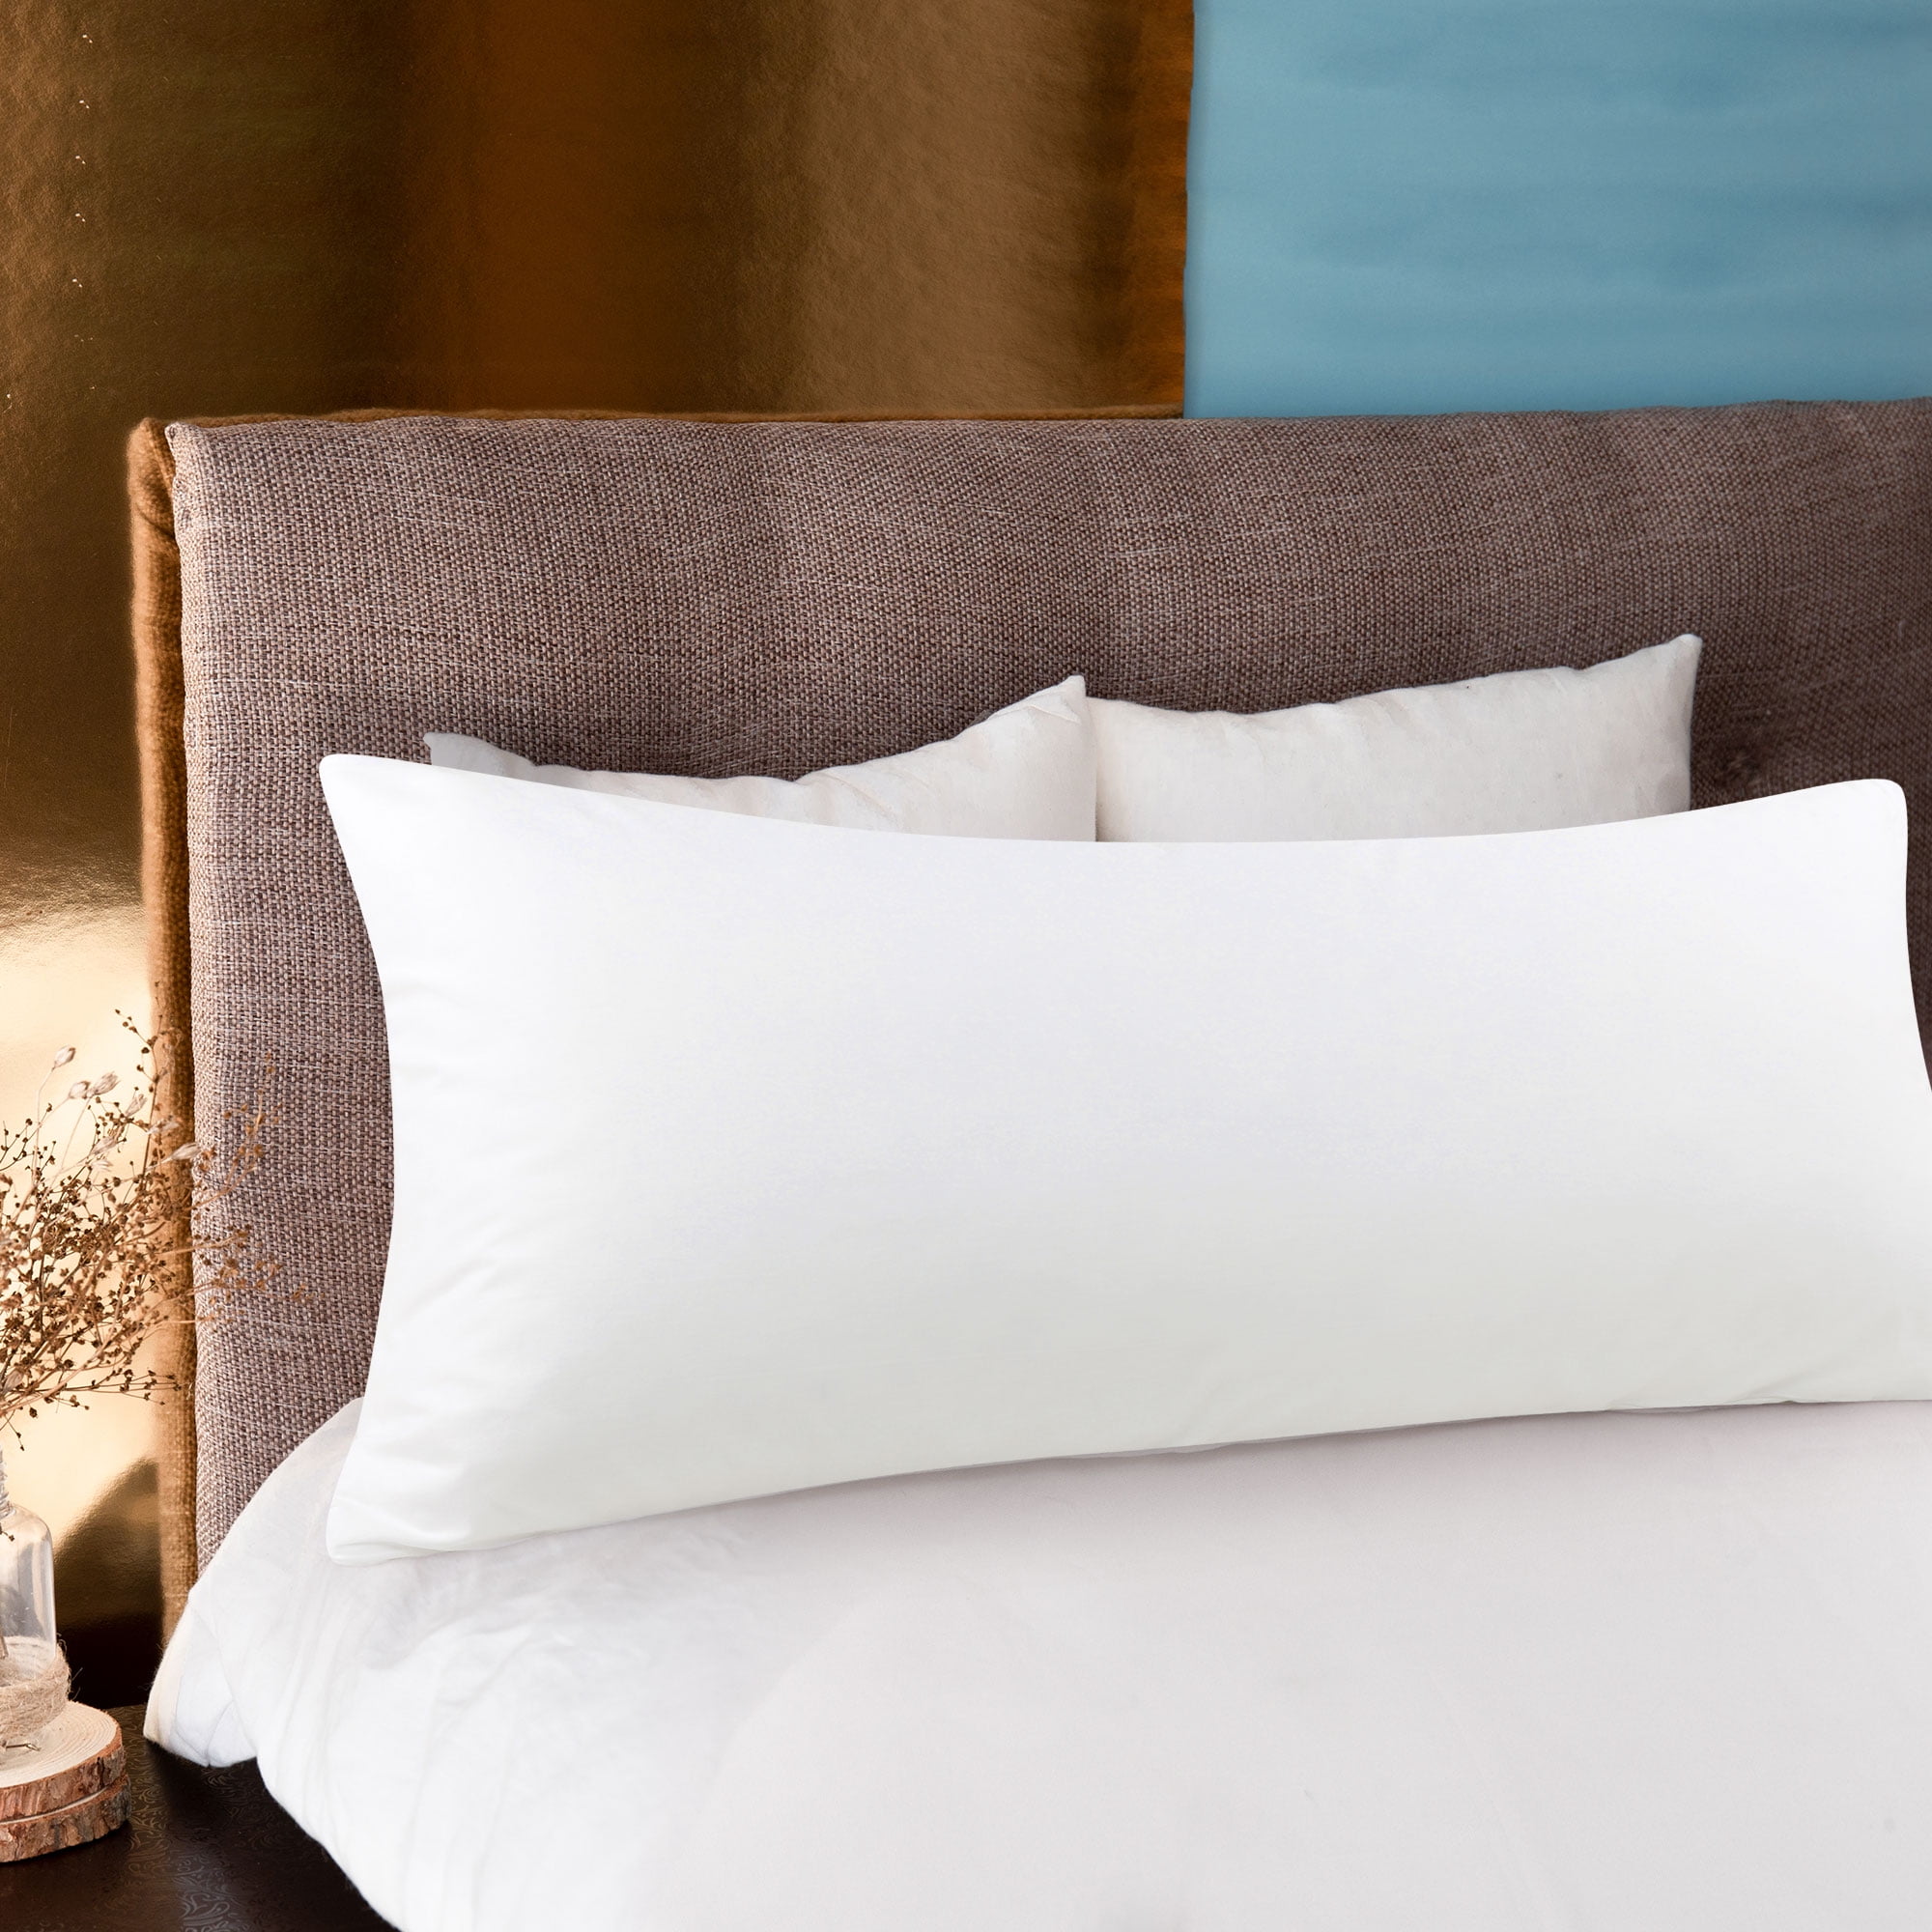 15 new bright white T250 series premium pillow cases standard size hotel grade 